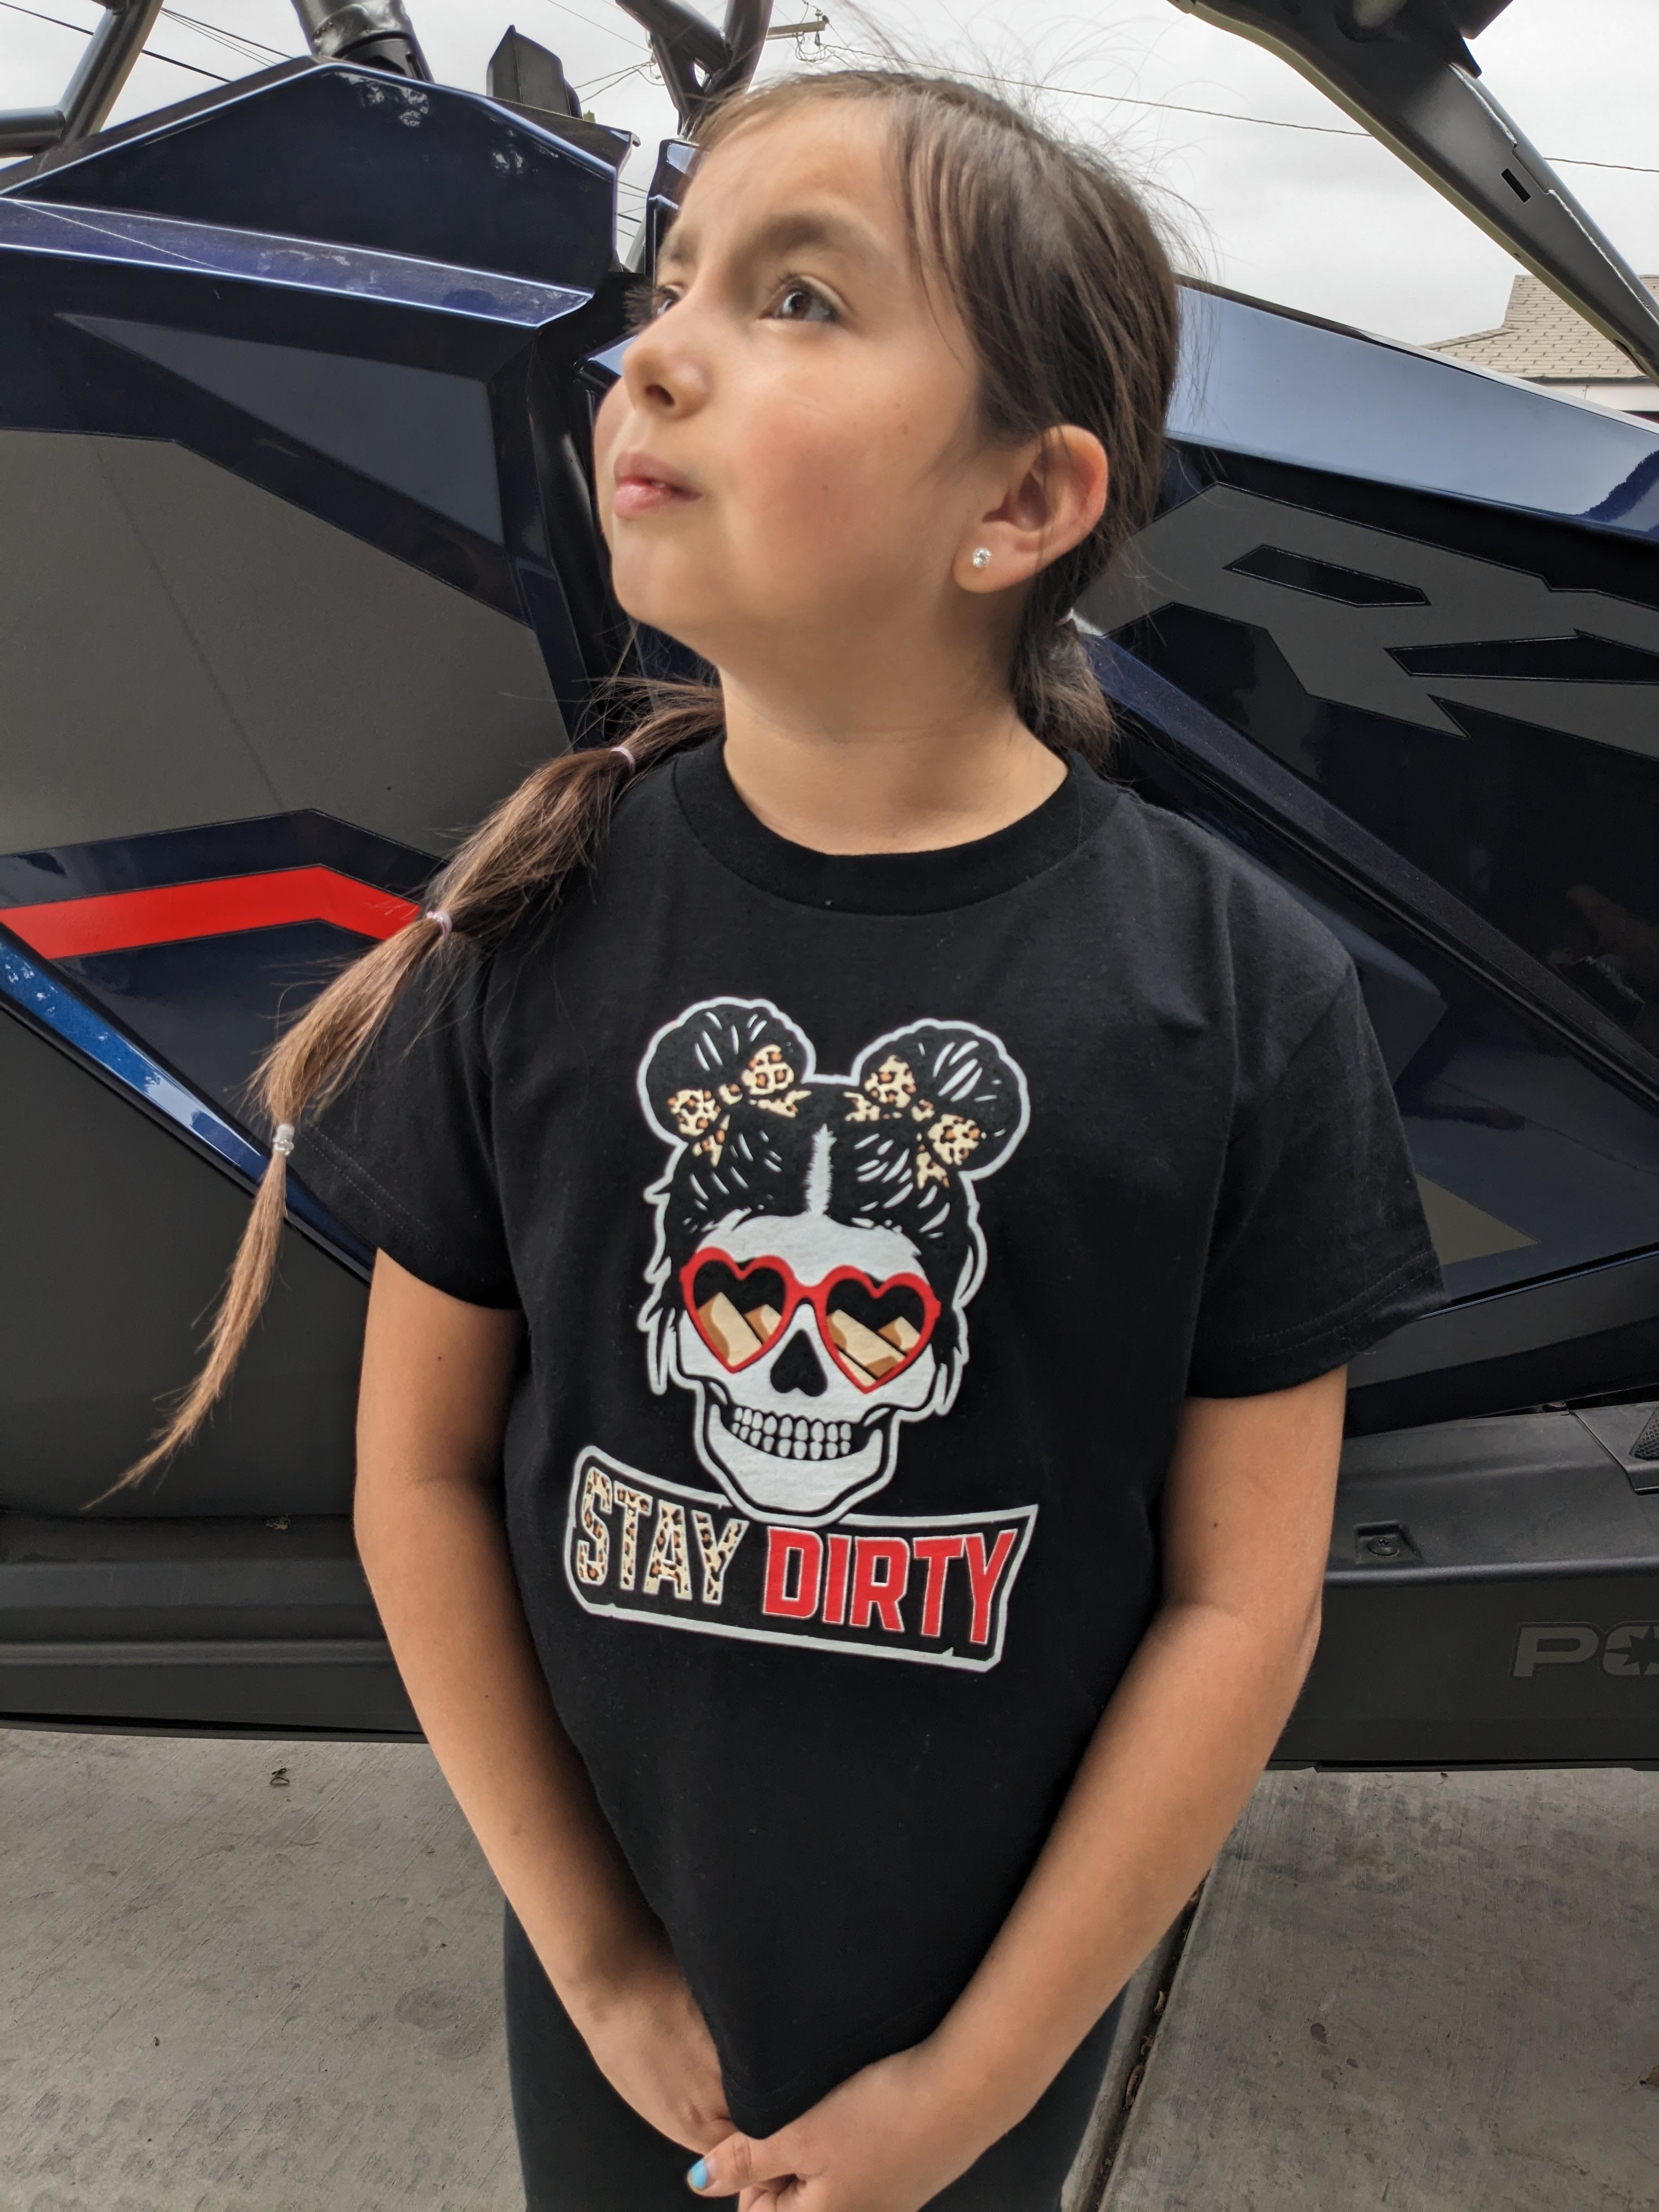 Girls Skull - Stay Dirty - Toddler Shirt